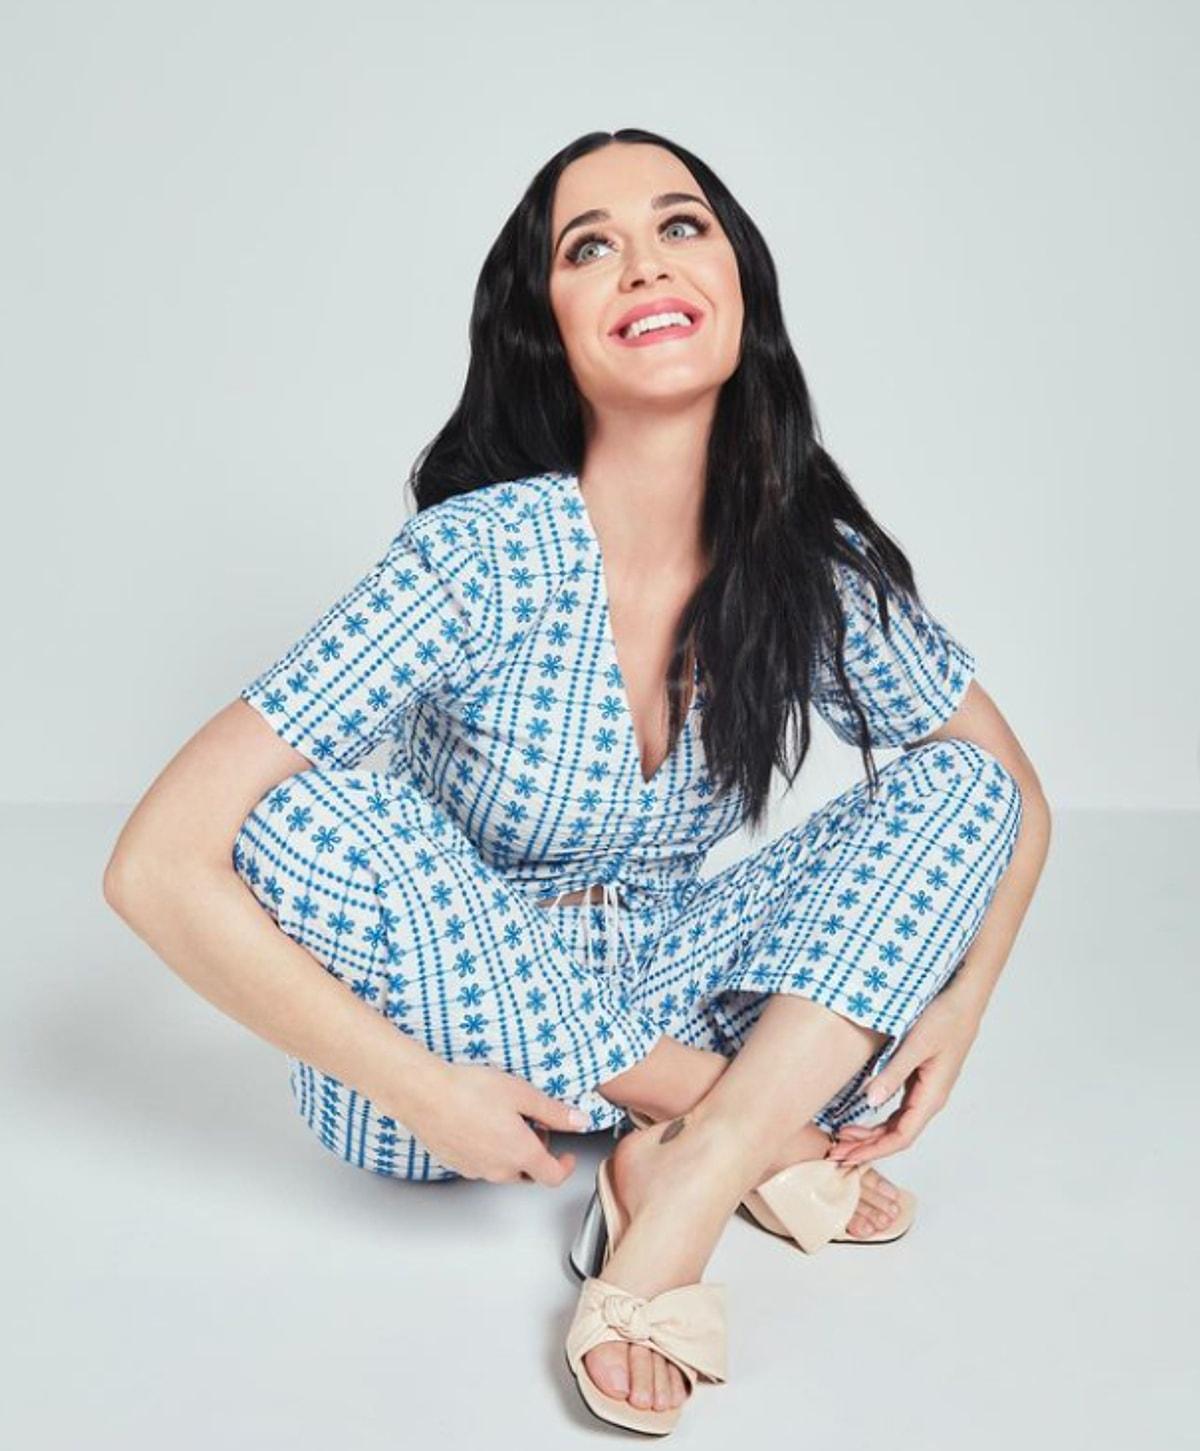 19. Katy Perry